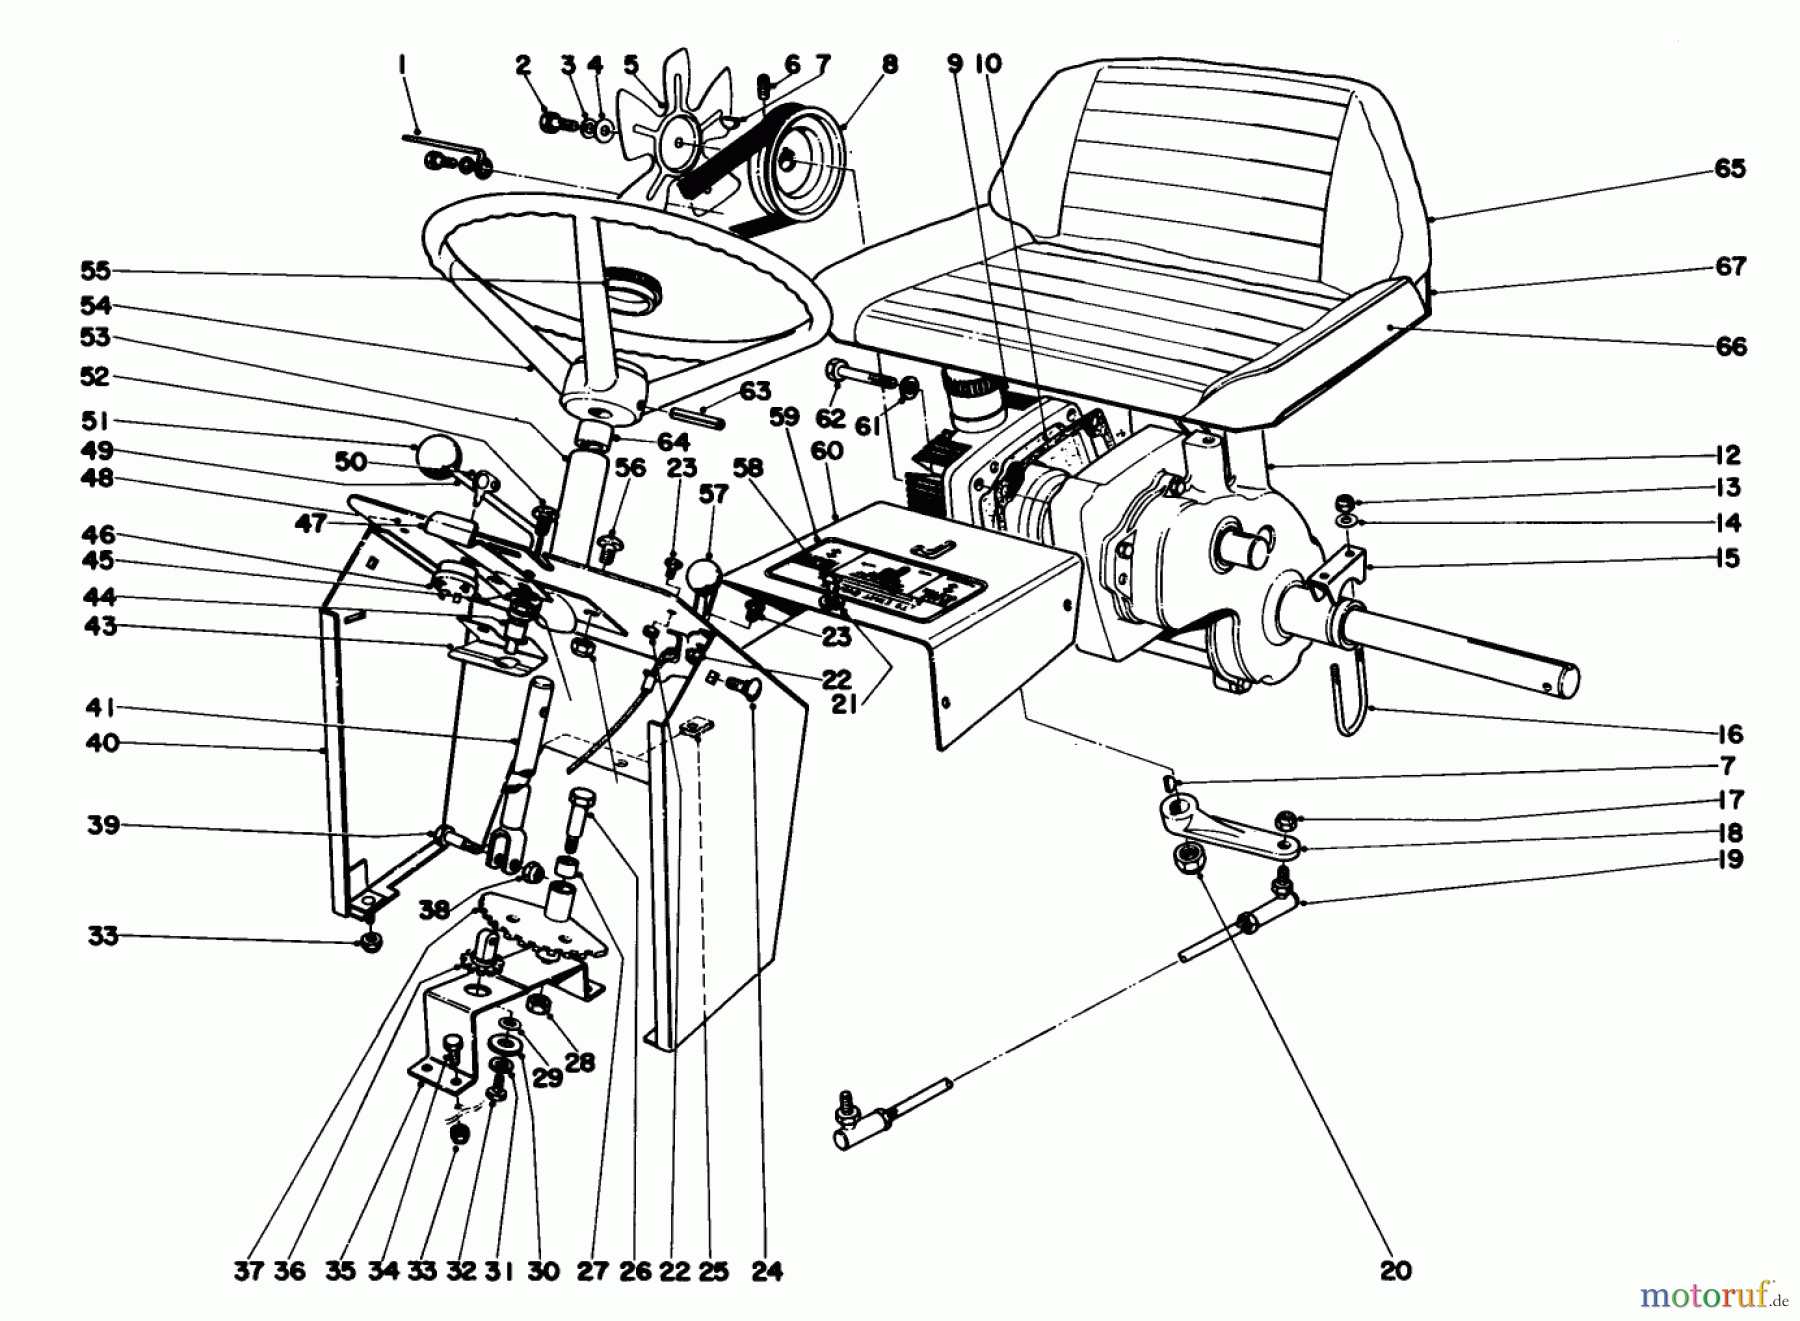  Toro Neu Mowers, Lawn & Garden Tractor Seite 1 55256 (888) - Toro 888 Toromatic Tractor, 1971 (1000001-1999999) DASH AND TRANSAXLE ASSEMBLY